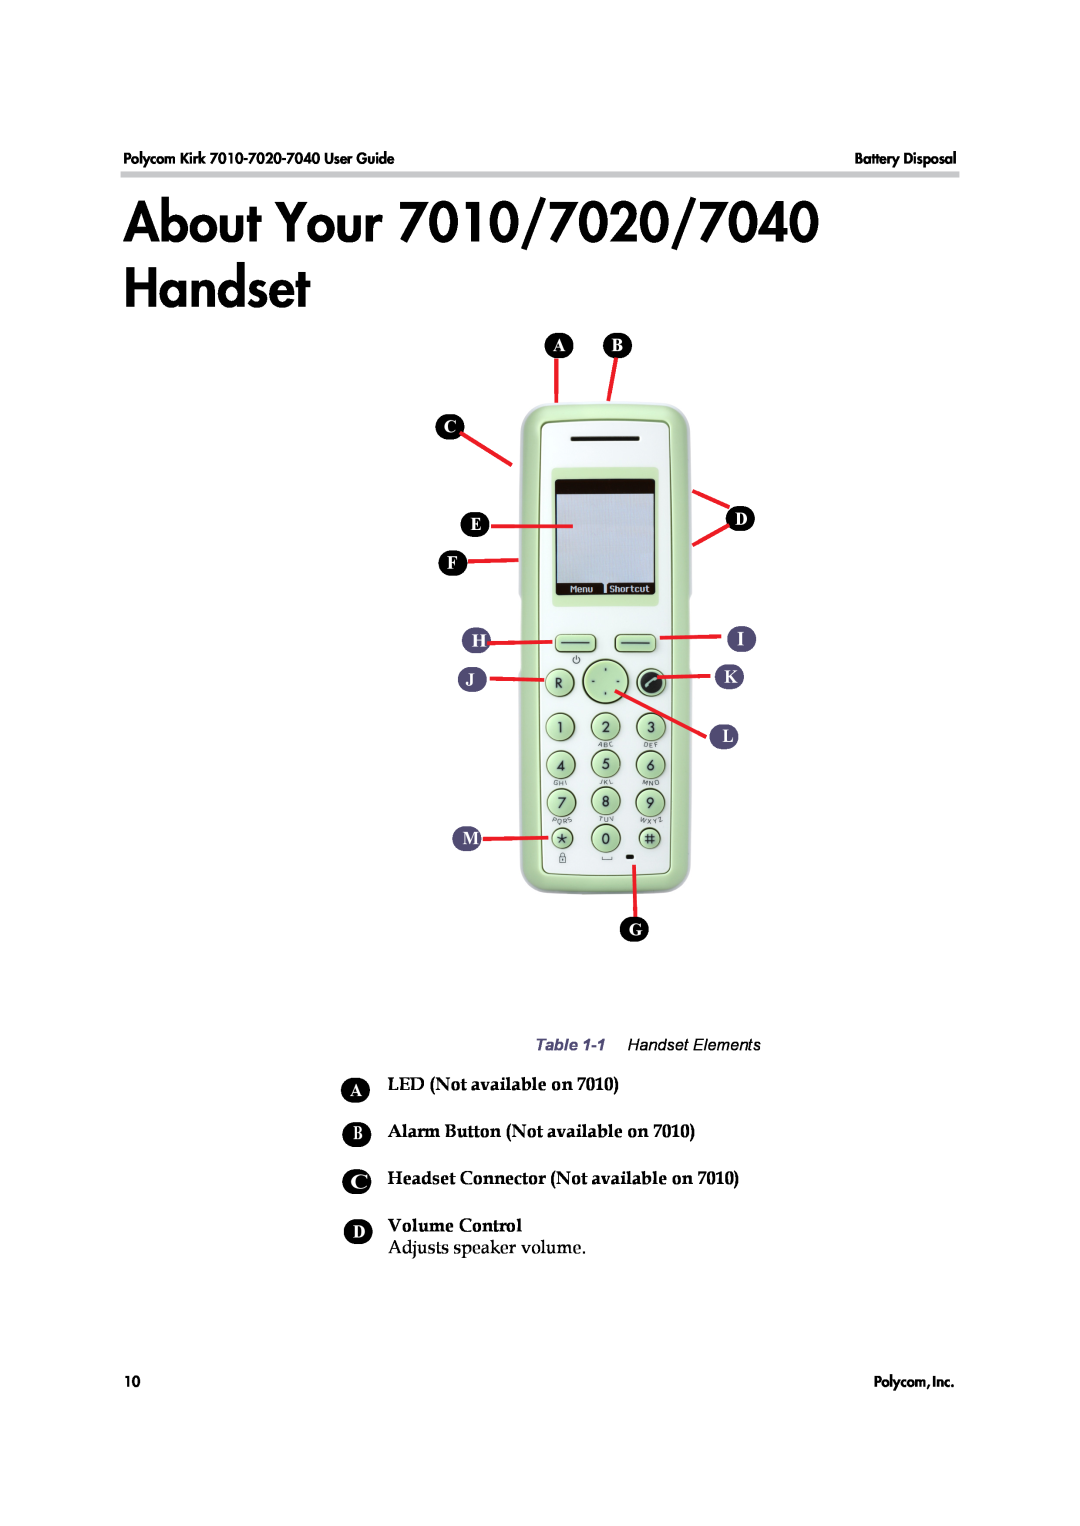 Polycom About Your 7010/7020/7040 Handset, H J K L M, A B C Ed F, 1 Handset Elements, Battery Disposal, Polycom, Inc 